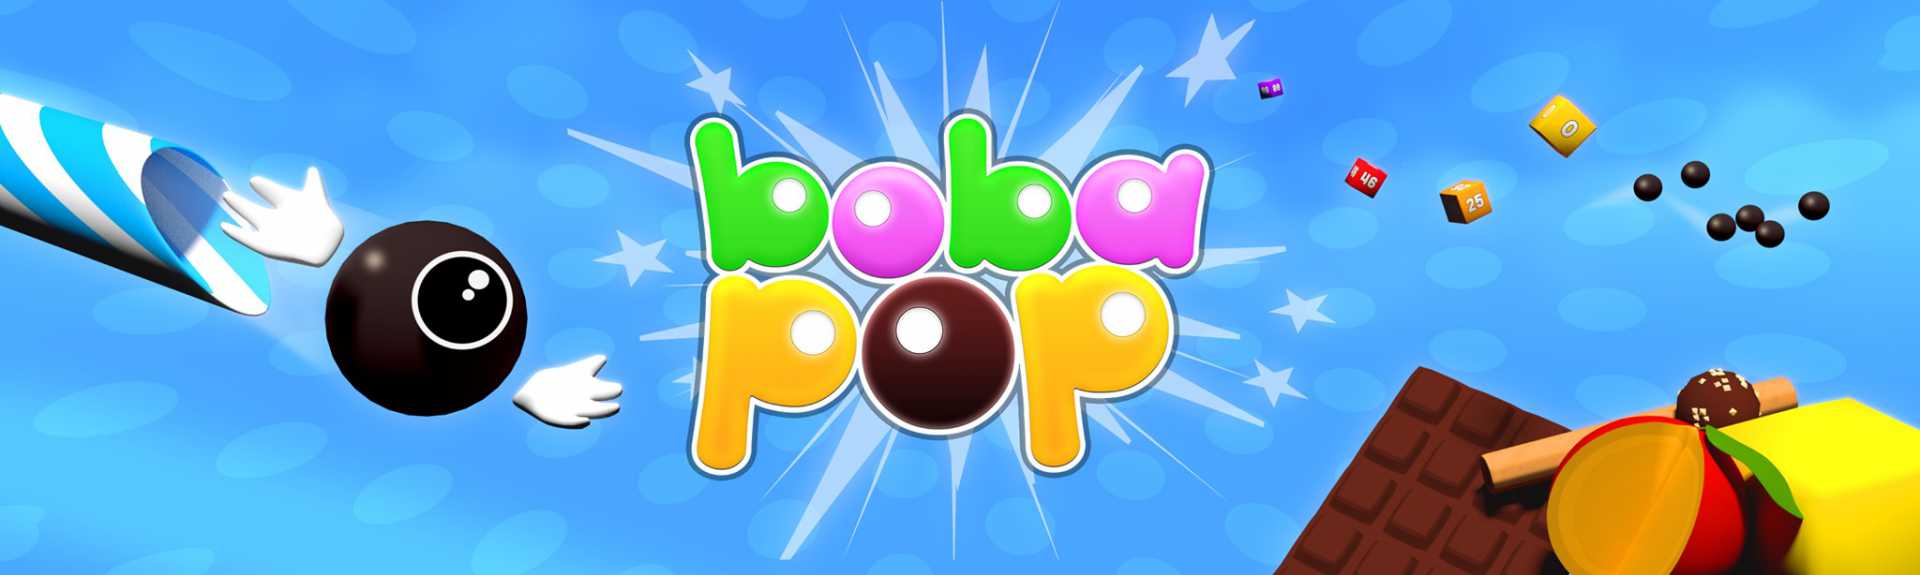 Boba Pop